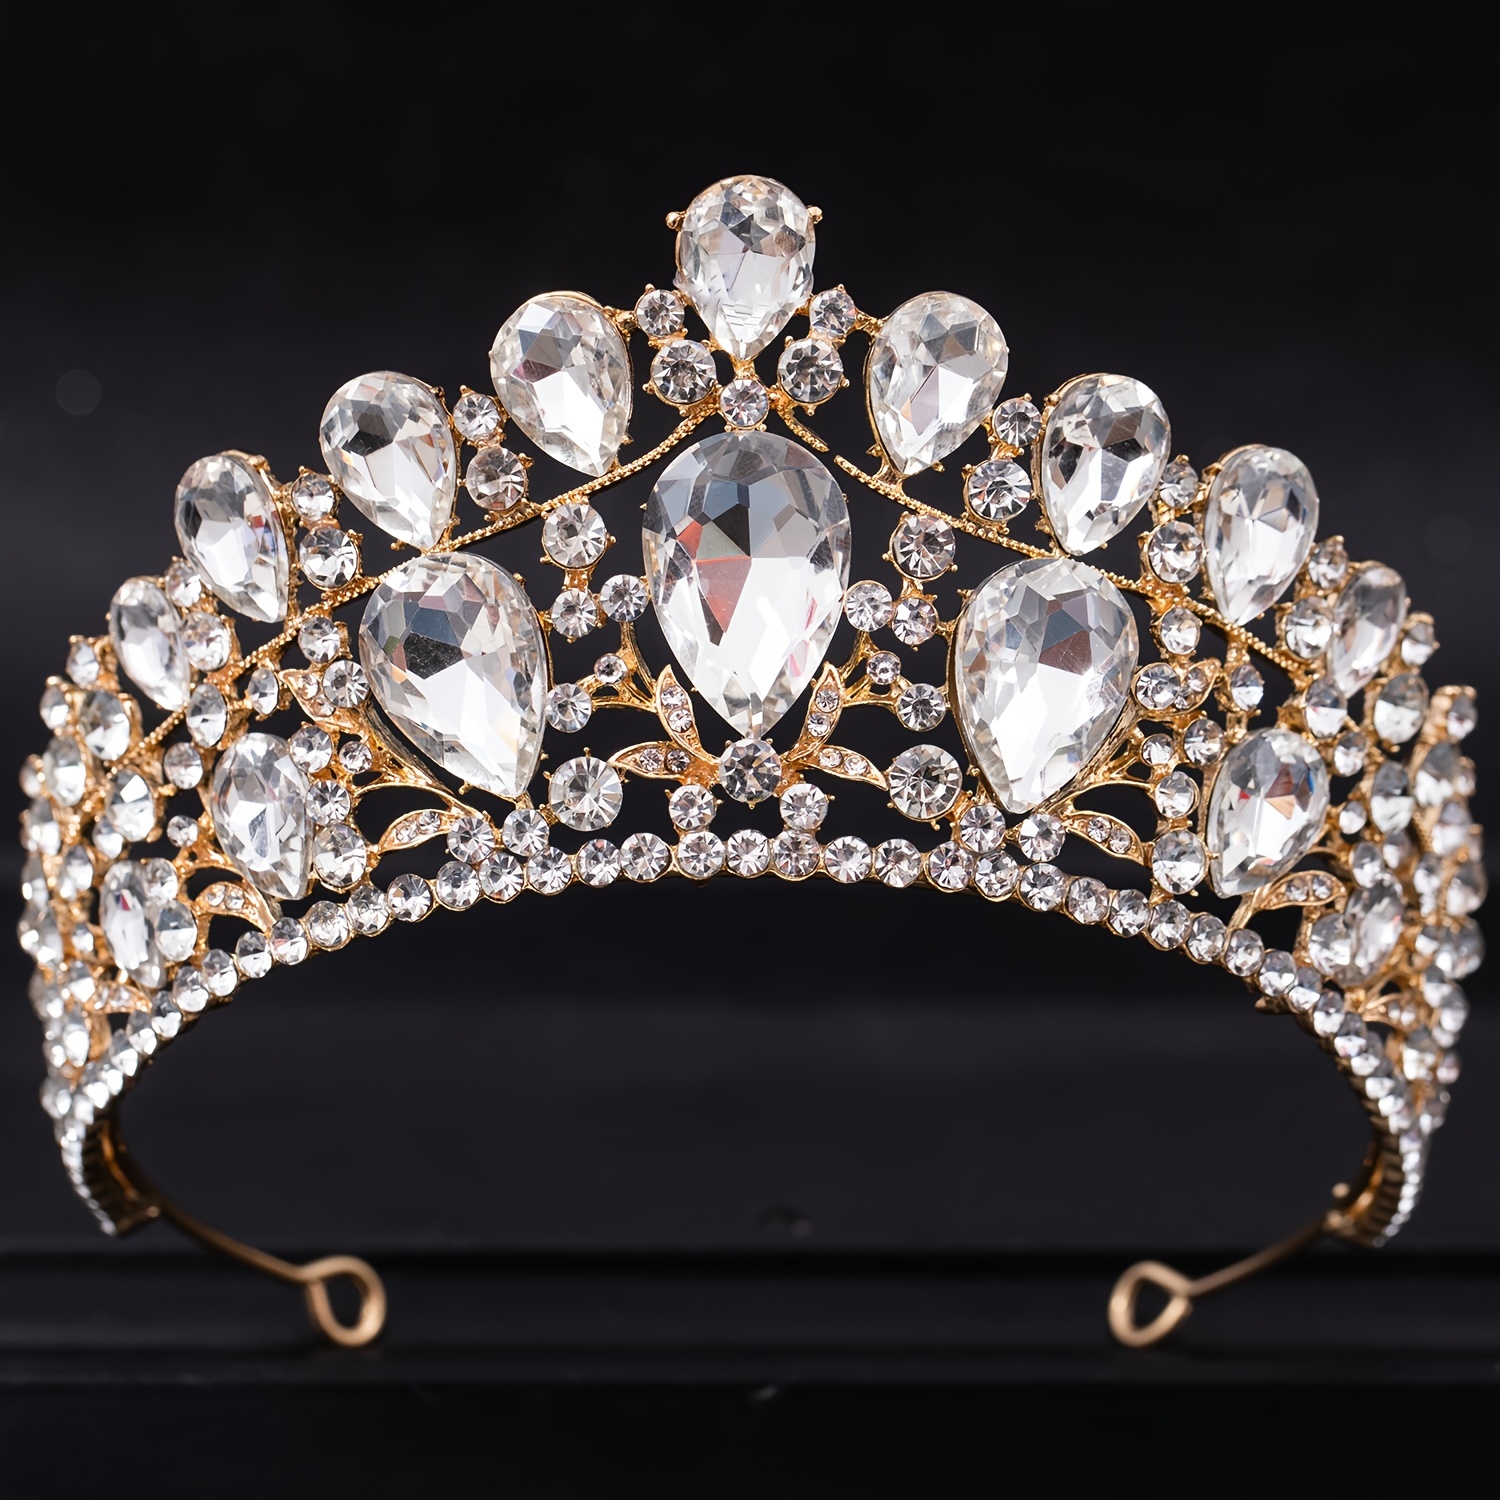 Corona dorada de reina para mujer, tiaras y coronas de boda con diamantes  de imitación, diadema de tiara de cumpleaños, accesorios para el cabello